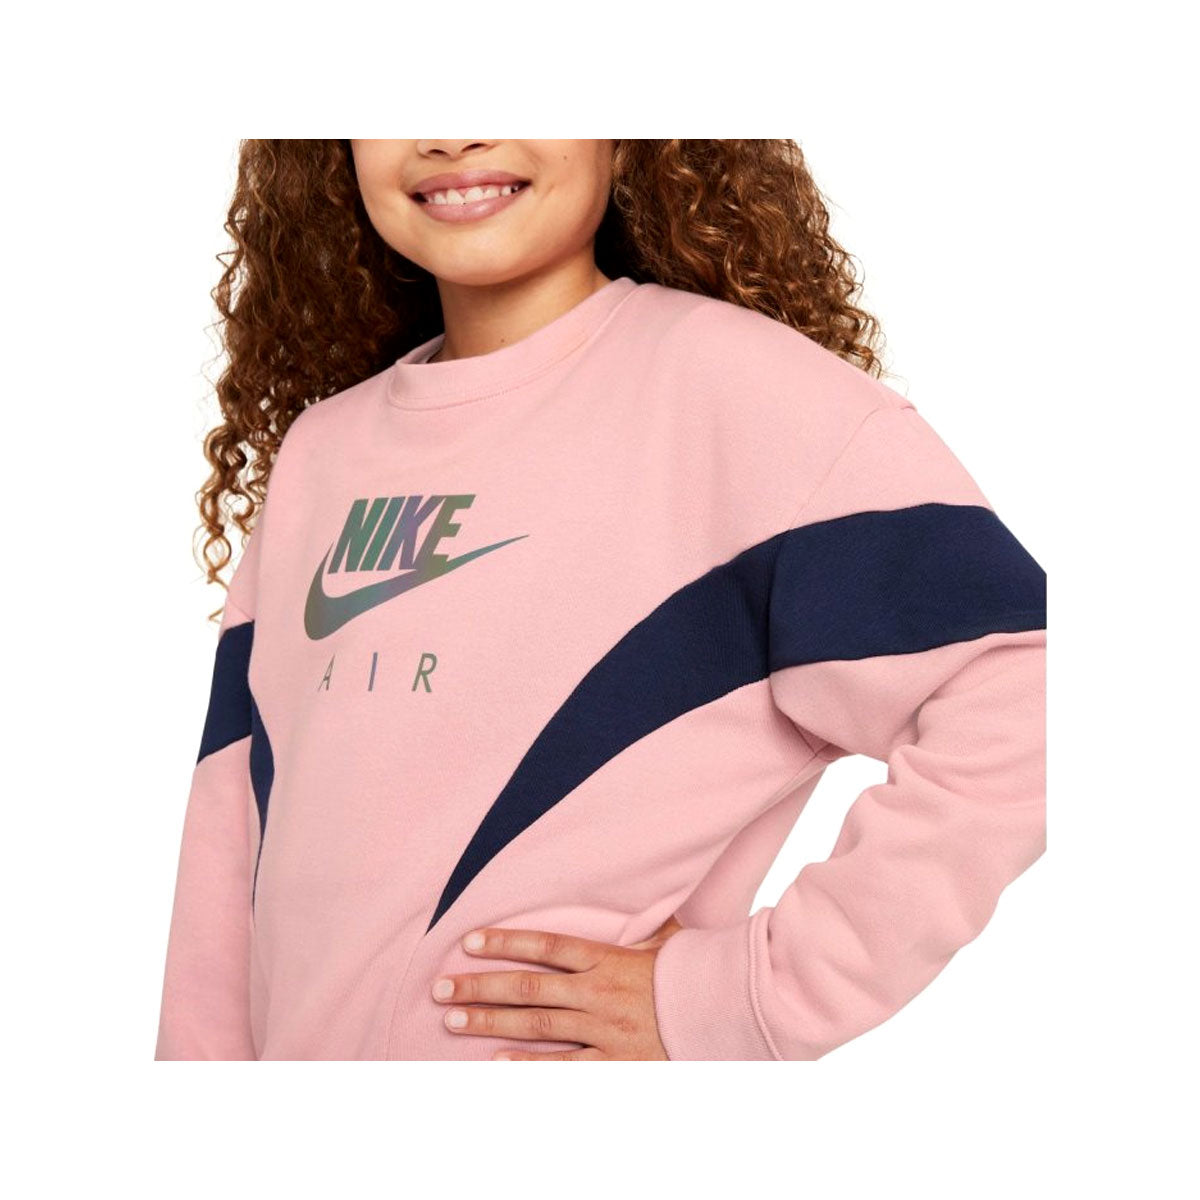 Nike Air Girls French Terry Sweatshirt